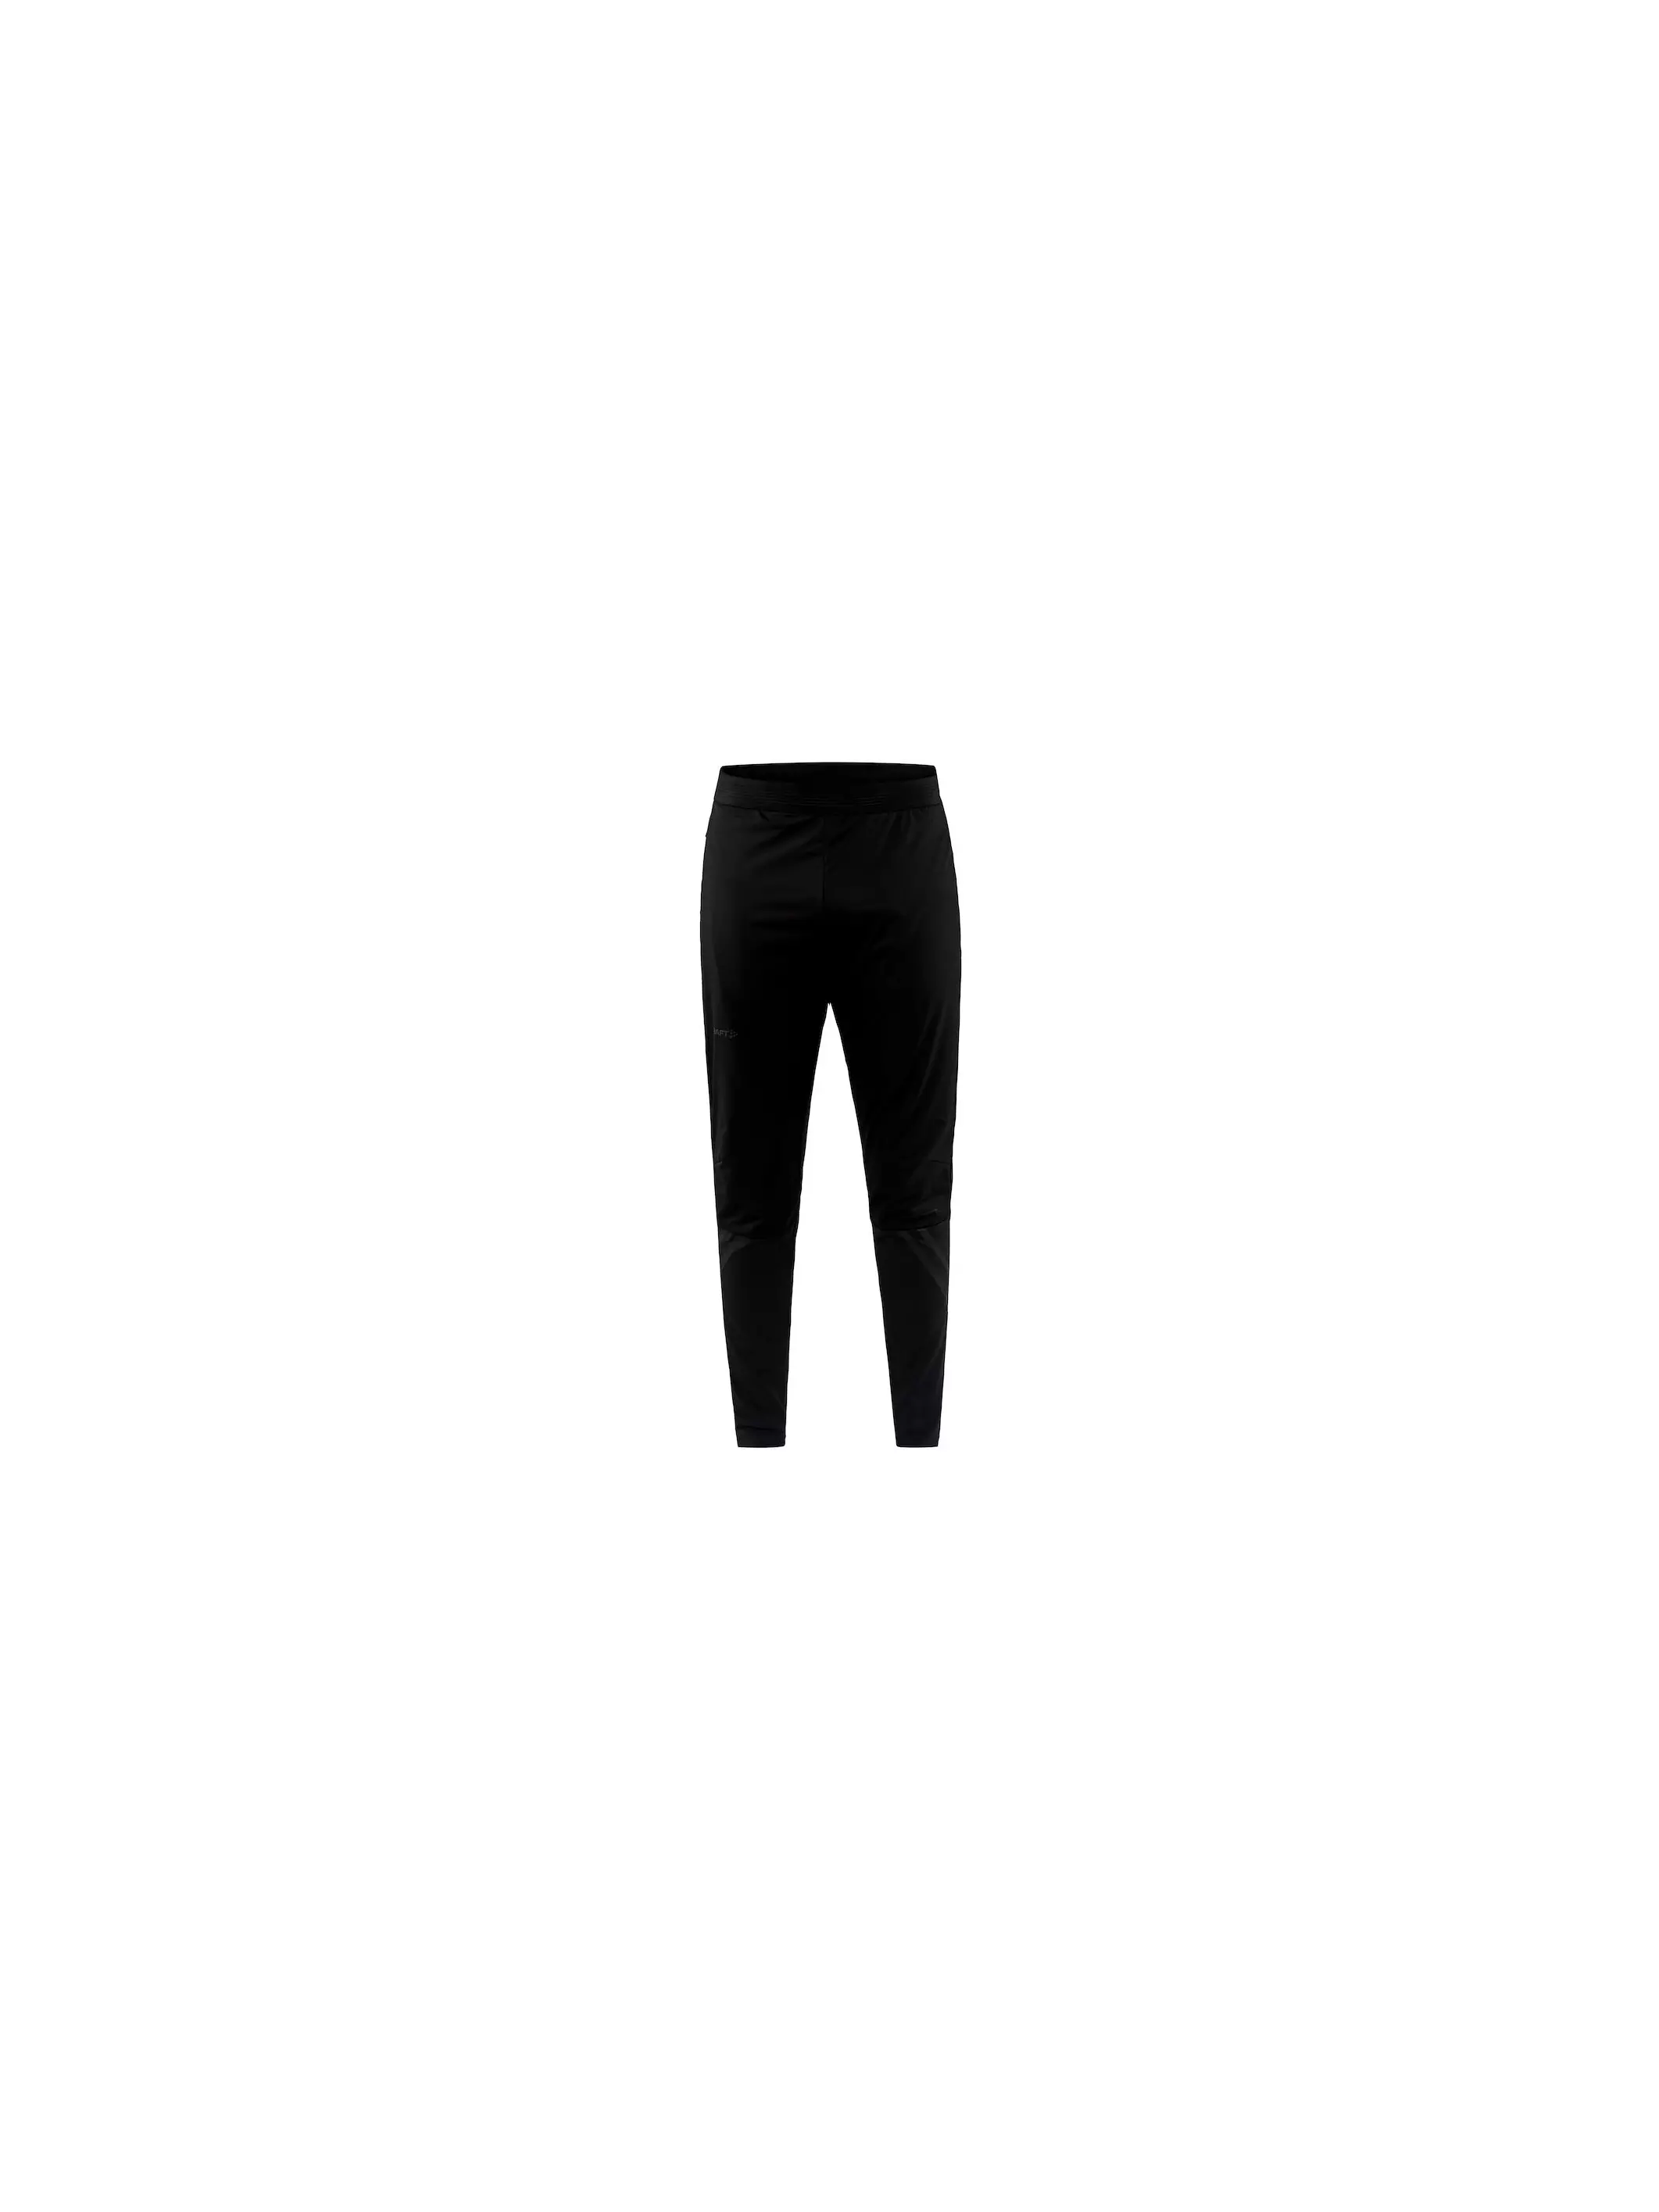 Pantalons & Collants Craft ADV SUBZ LUMEN WIND PANTS 2 M - 1911342